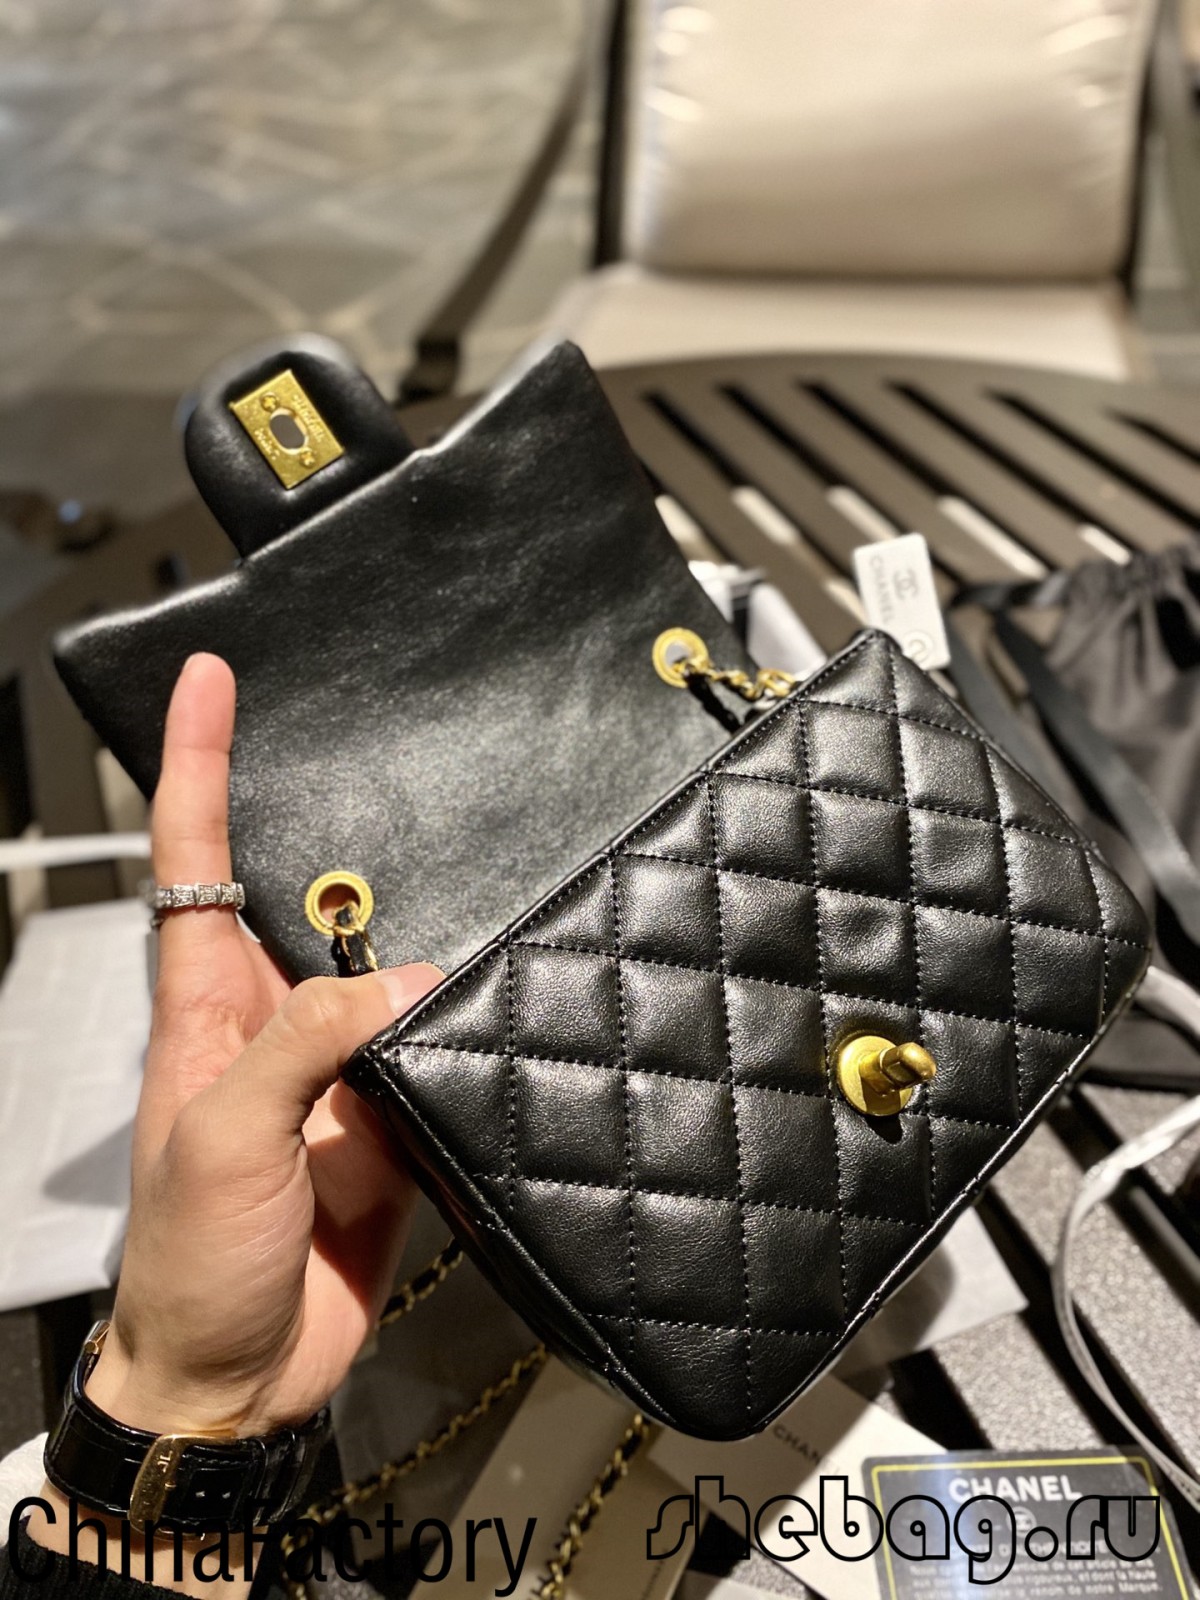 1:1 Chanel အိတ်ပုံတူ- ချိန်ညှိနိုင်သော ကွင်းဆက်ပါရှိသော ဂန္တဝင်ခေါက် (2022 ခေတ်အစားဆုံး)- အကောင်းဆုံး အရည်အသွေး အတု Louis Vuitton Bag အွန်လိုင်းစတိုး၊ ပုံစံတူ ဒီဇိုင်နာအိတ် ru